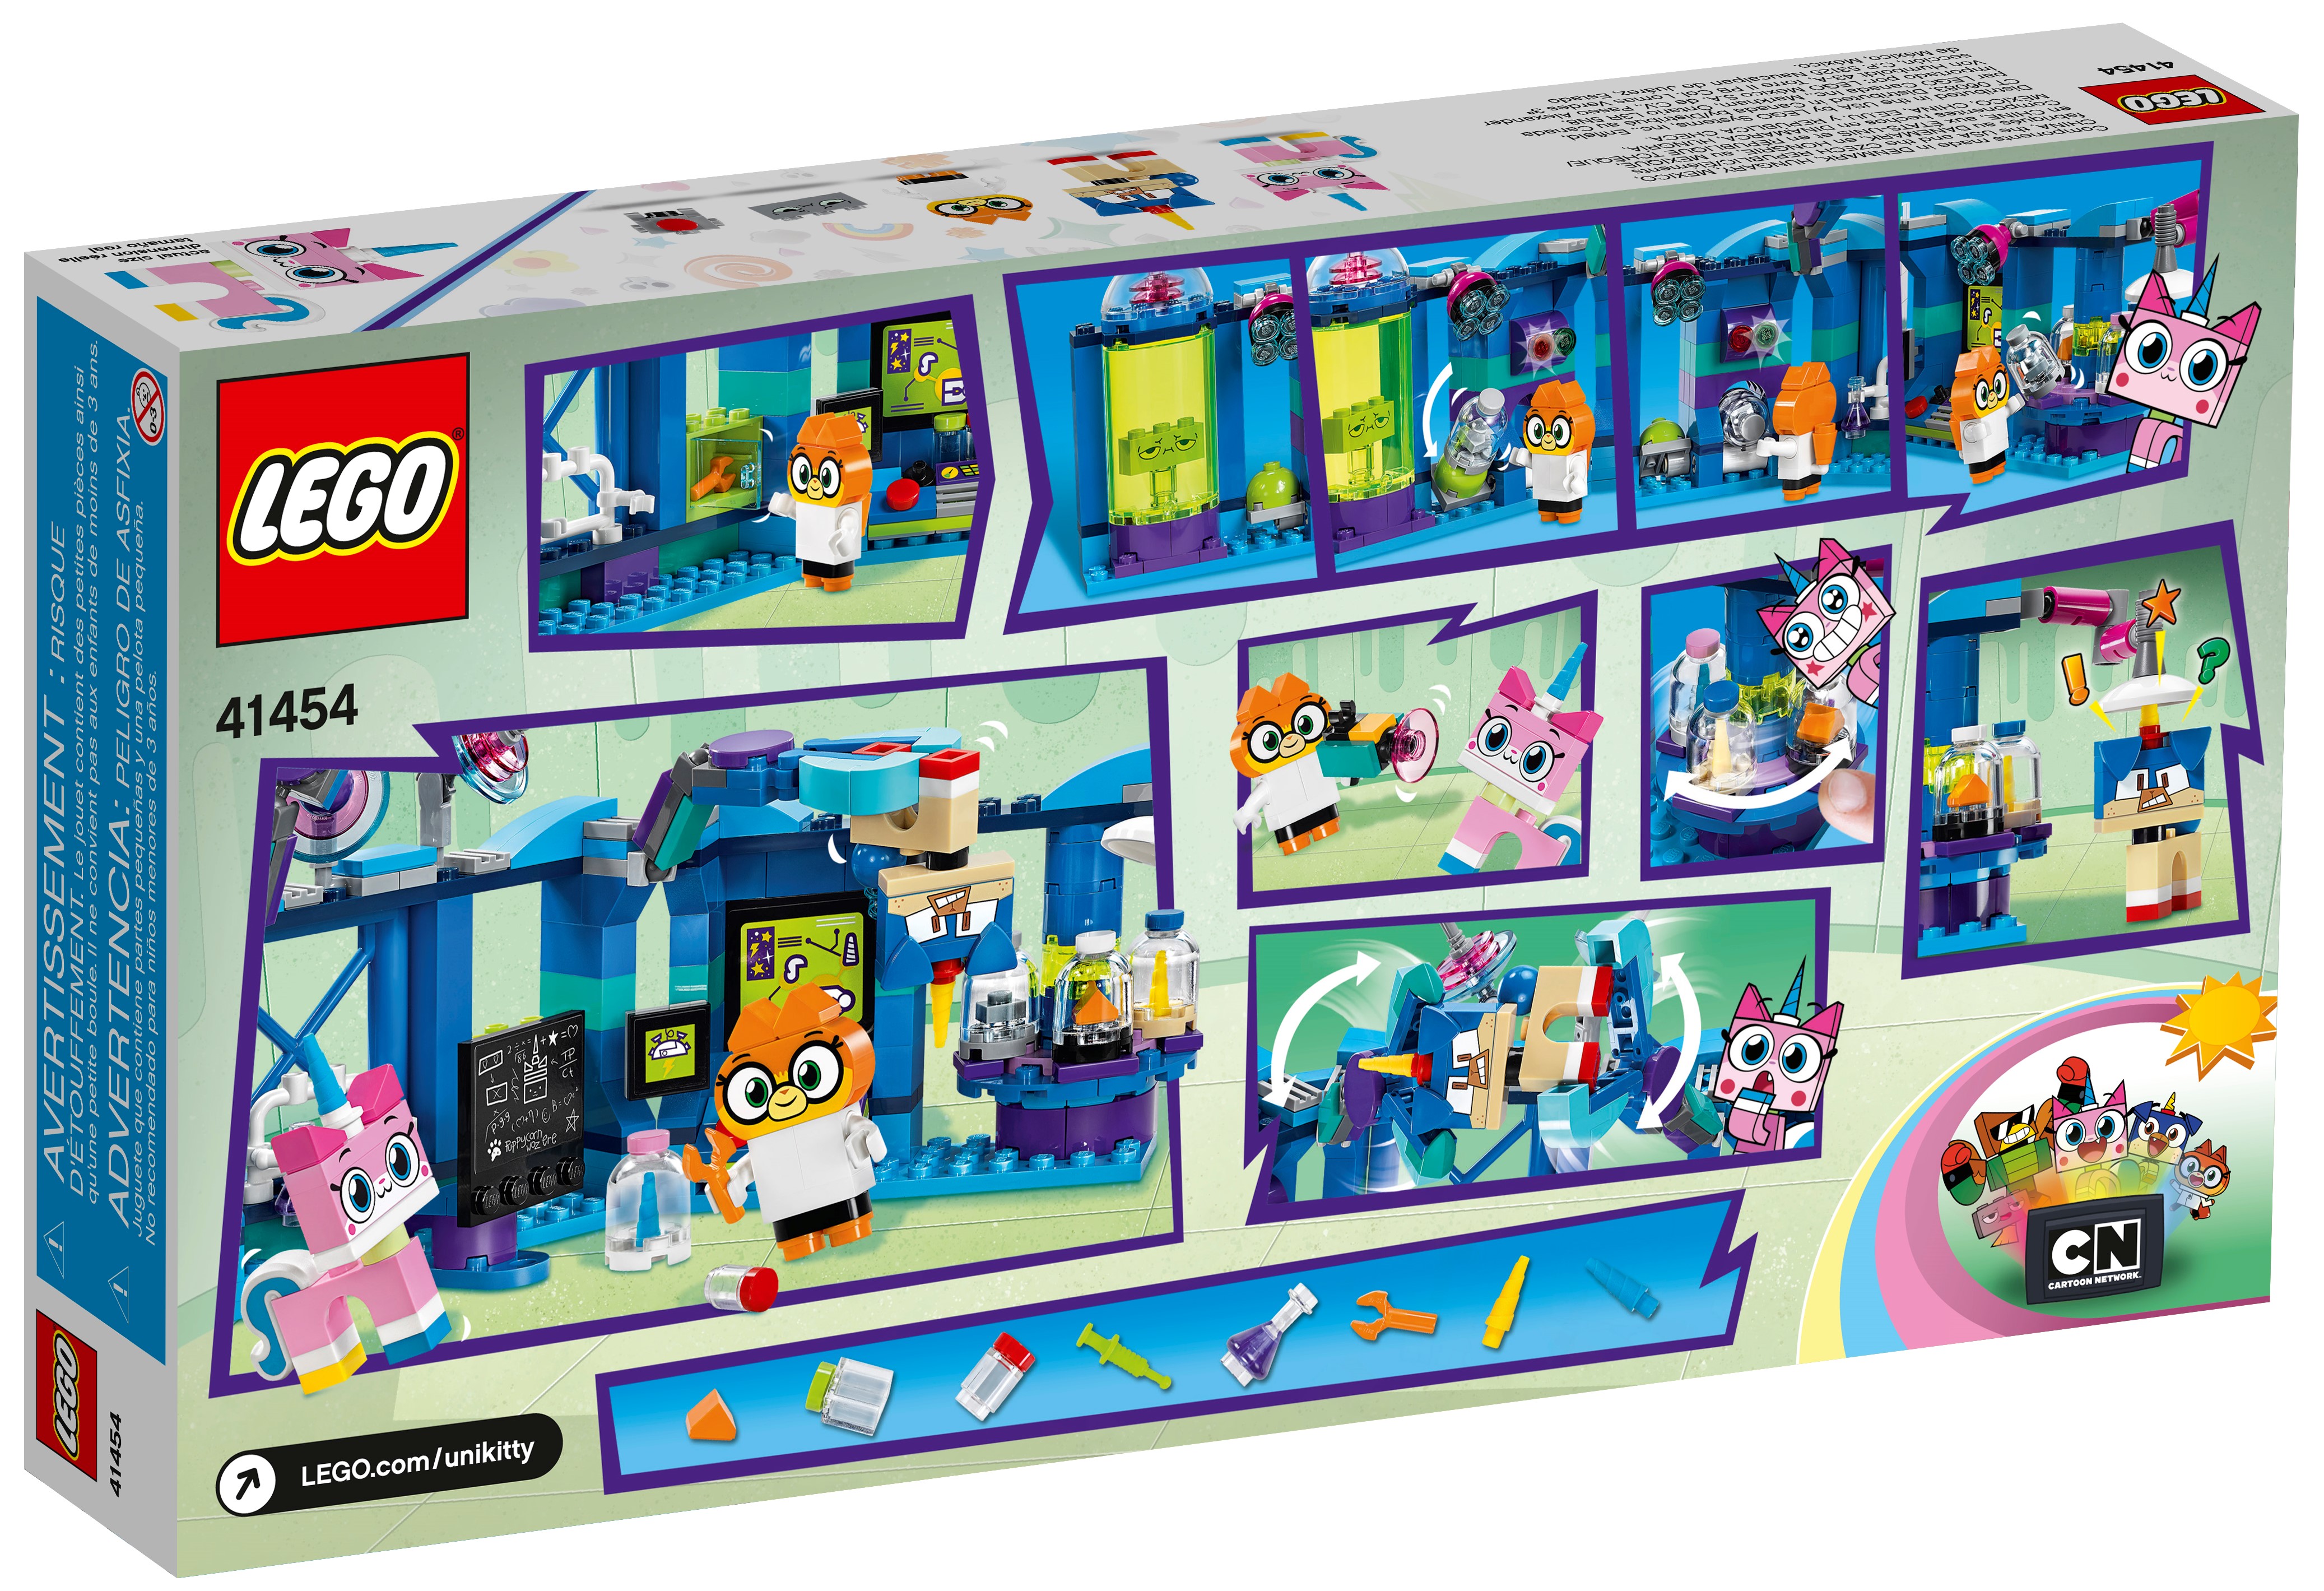 Fox 41454 41456 NEW! Lego Unikitty Minifigure Dr